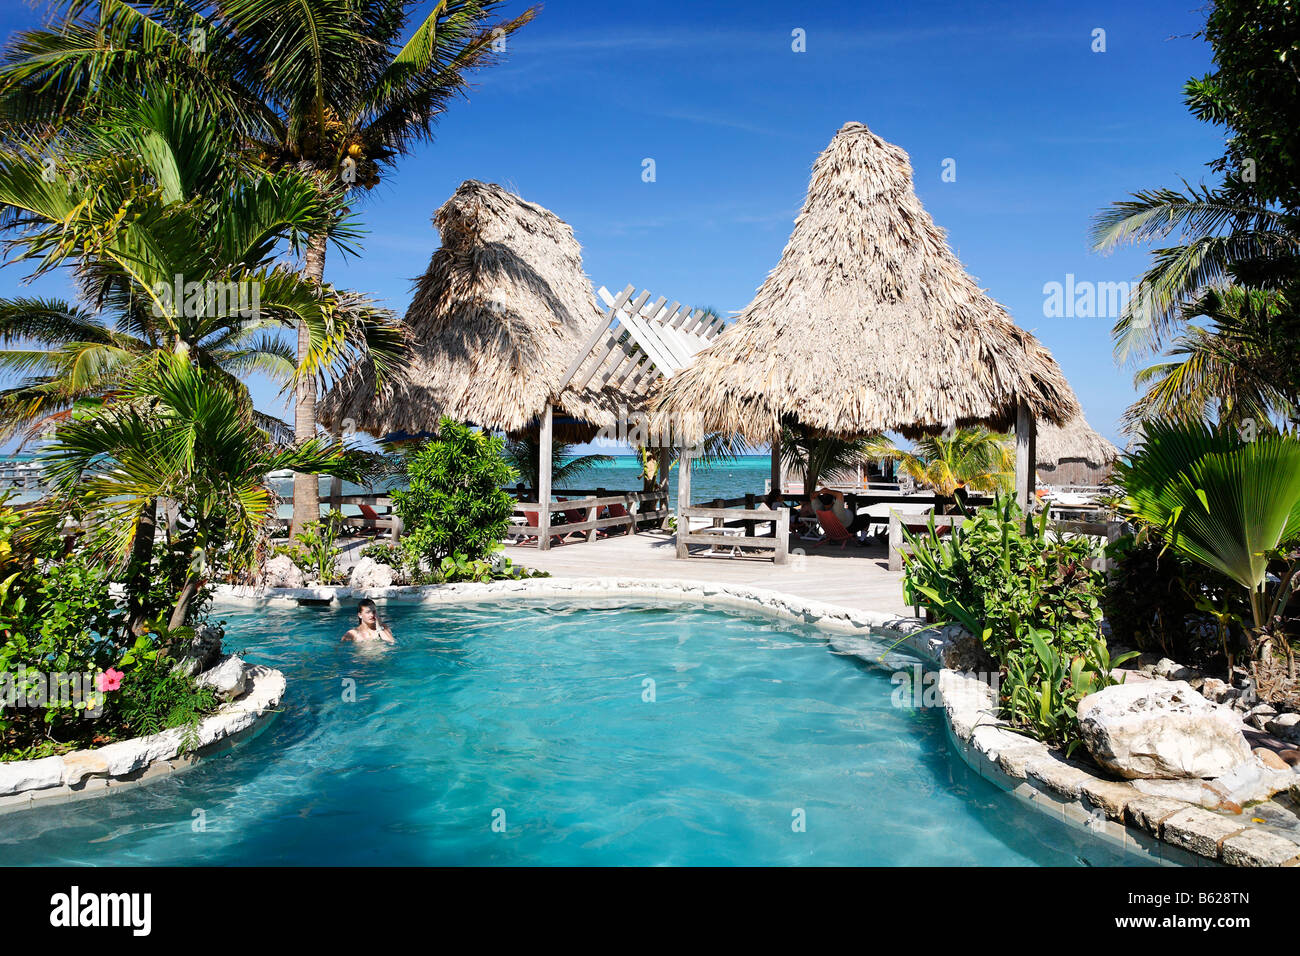 Swimmingpool des Hotels mit Blick auf den Ozean, San Pedro, Ambergris Cay Insel, Belize, Zentralamerika, Karibik Stockfoto